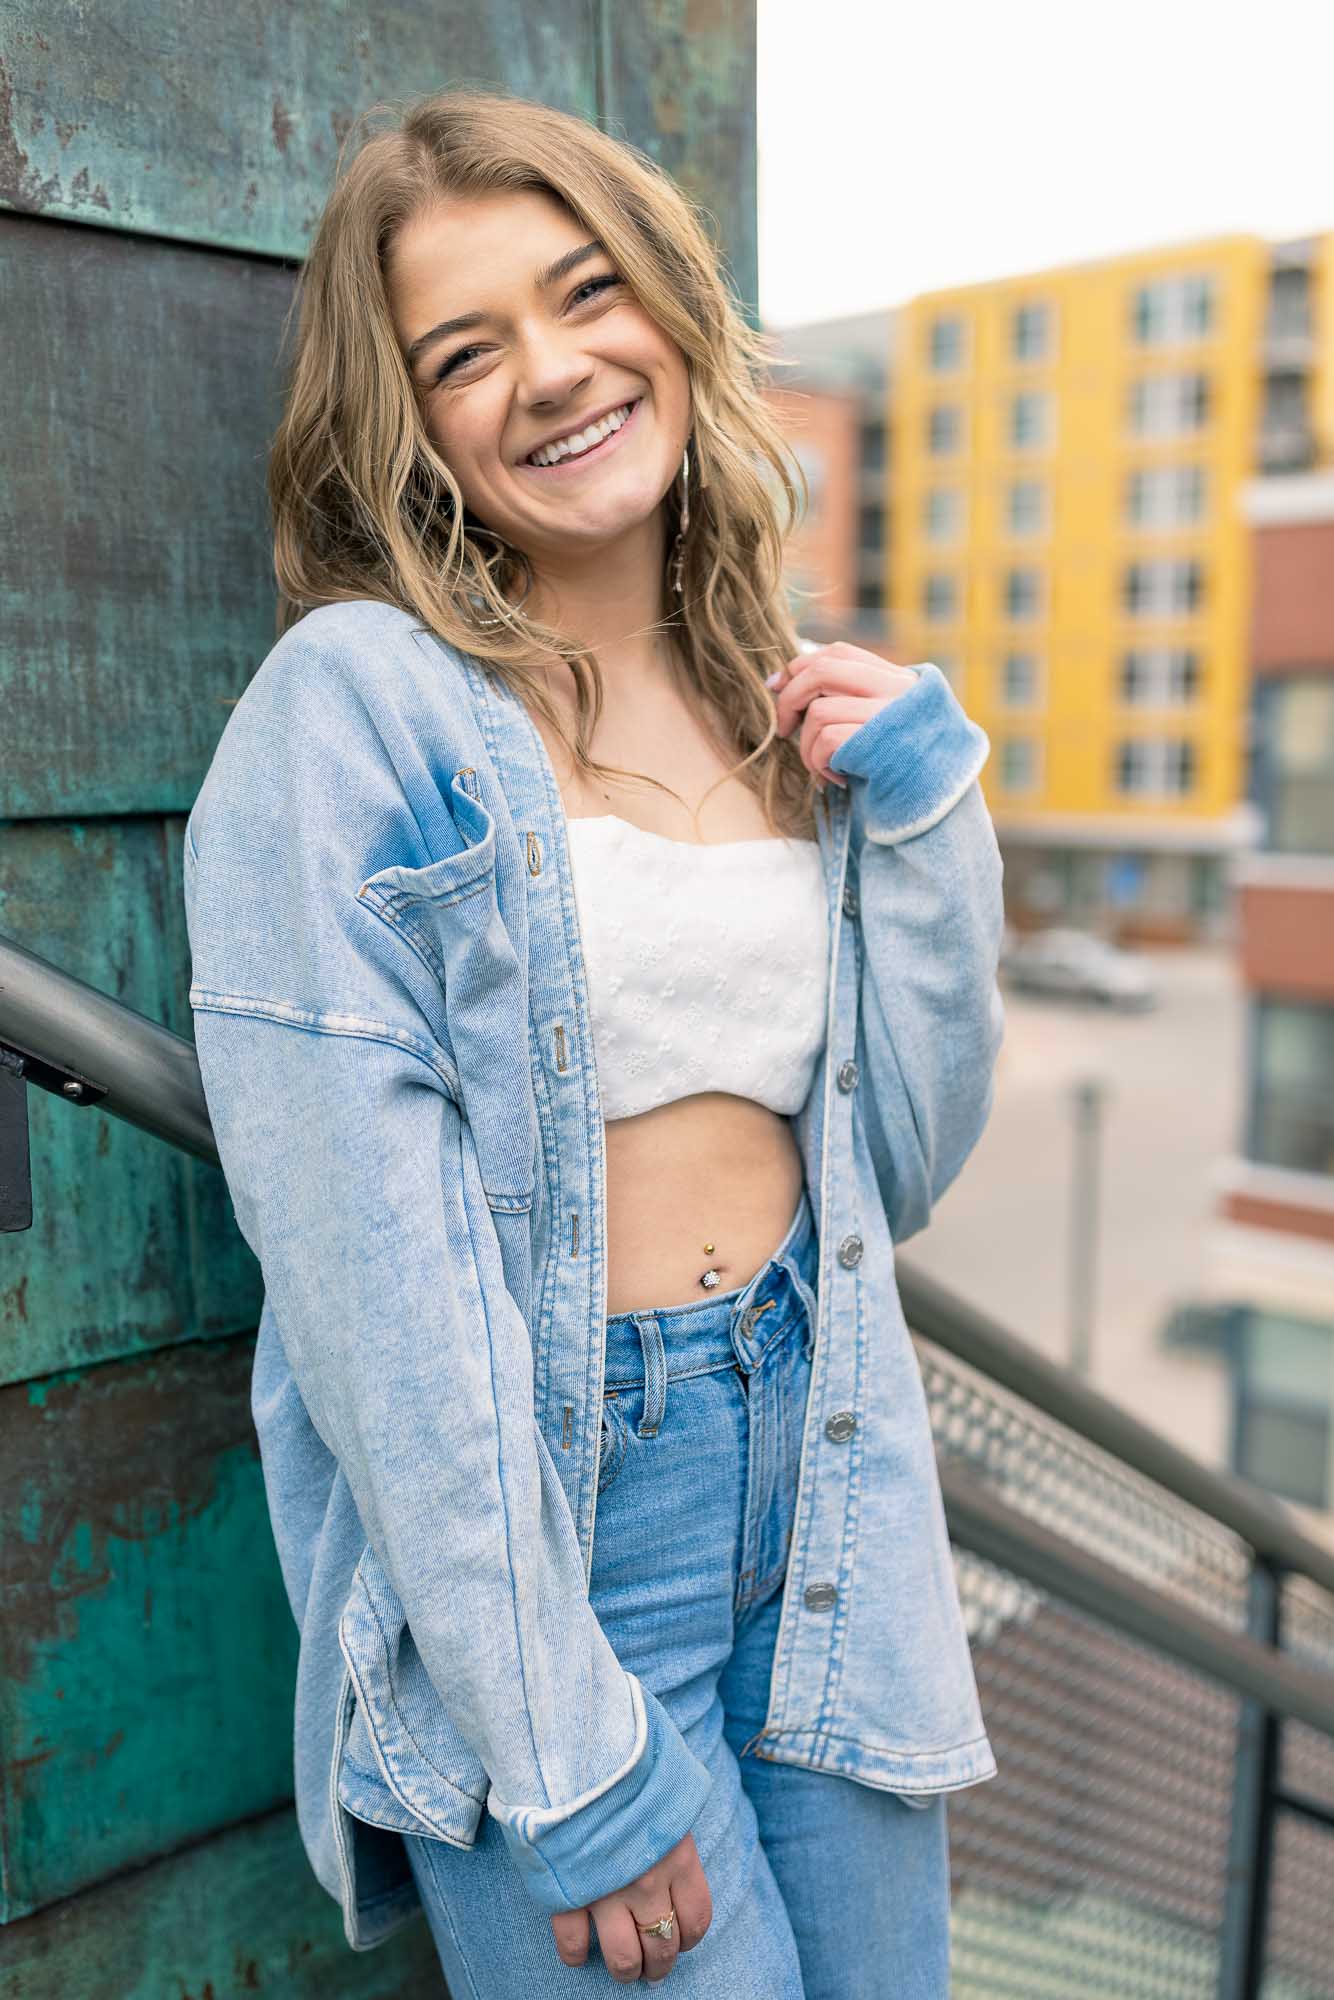 Young woman's senior pictures in Denver Colorado